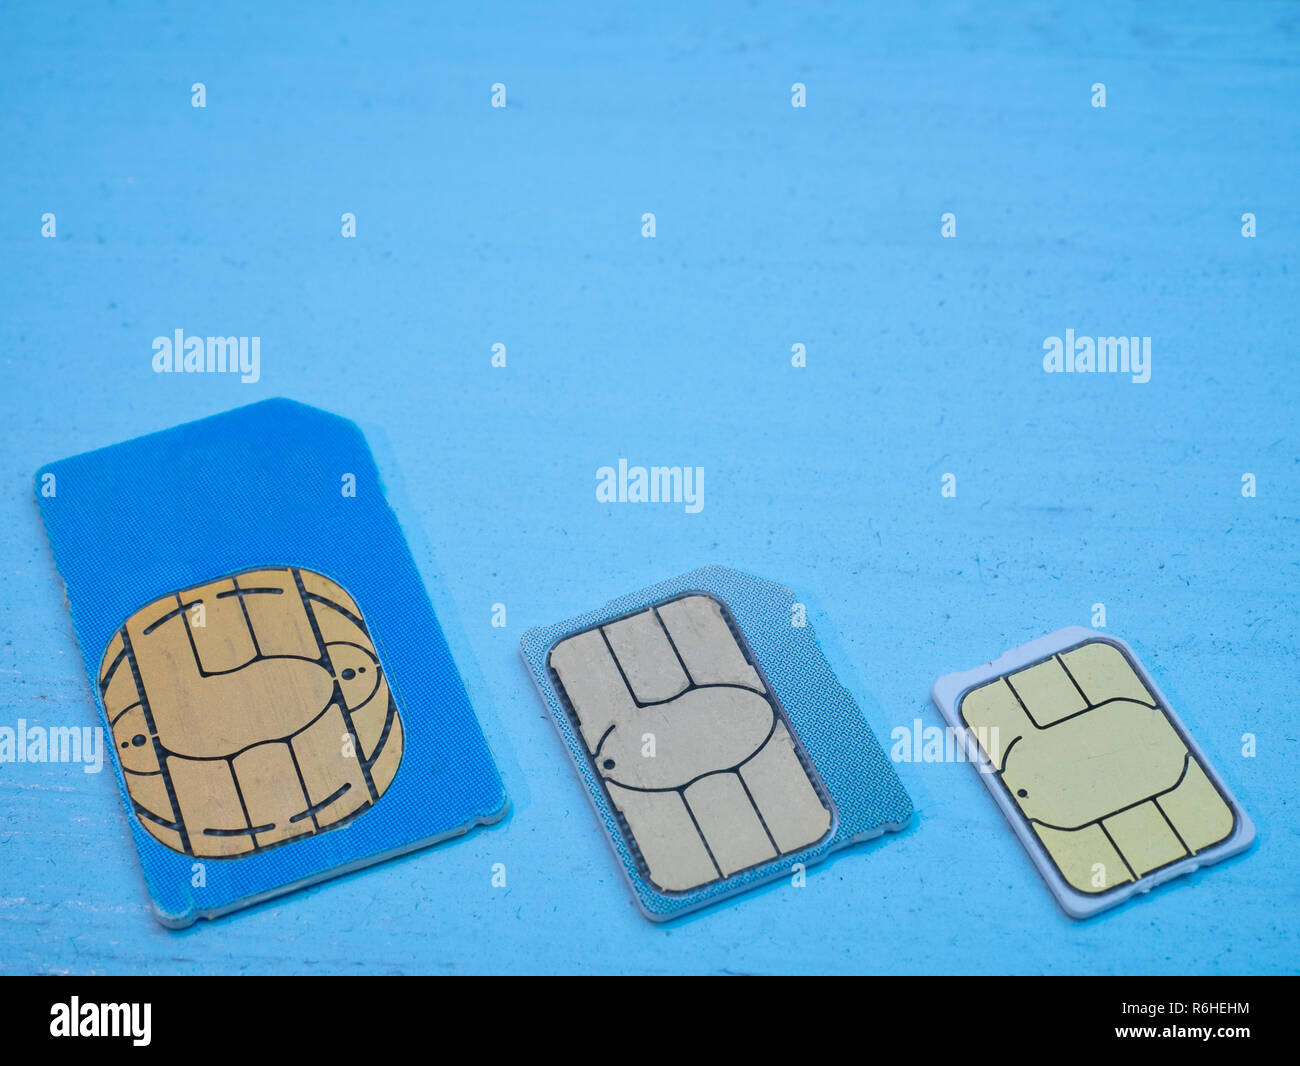 three sim cards standart, micro, nano 4g lte 5g ready on blue background. low angle shot Stock Photo